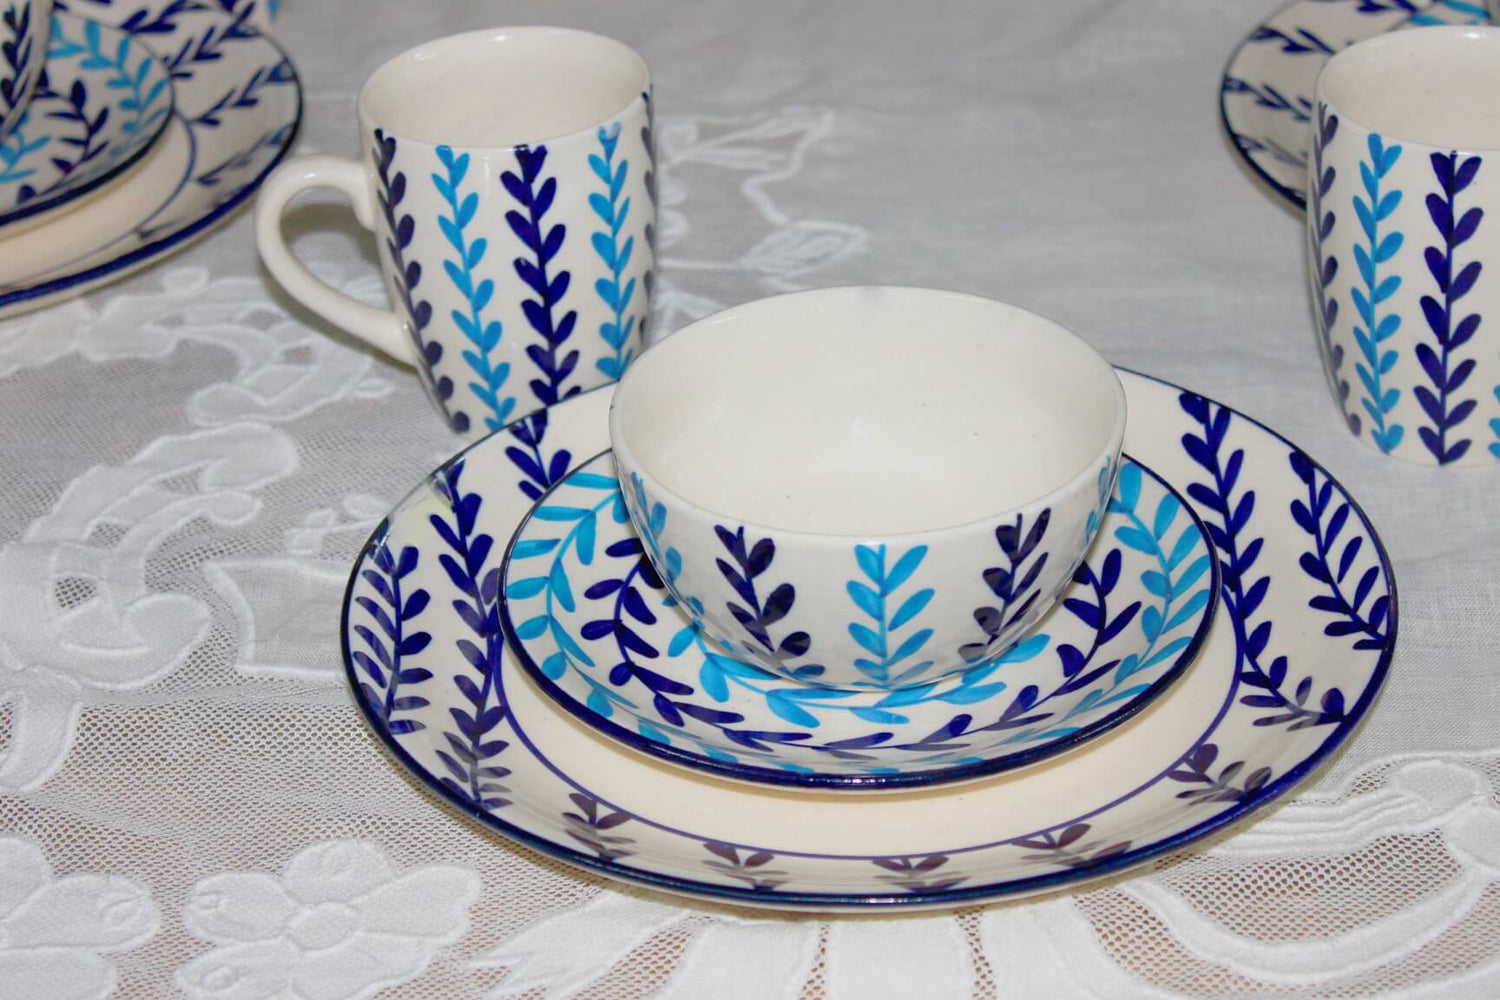 Twig – Handmade Ceramic Bowl – 1Pc